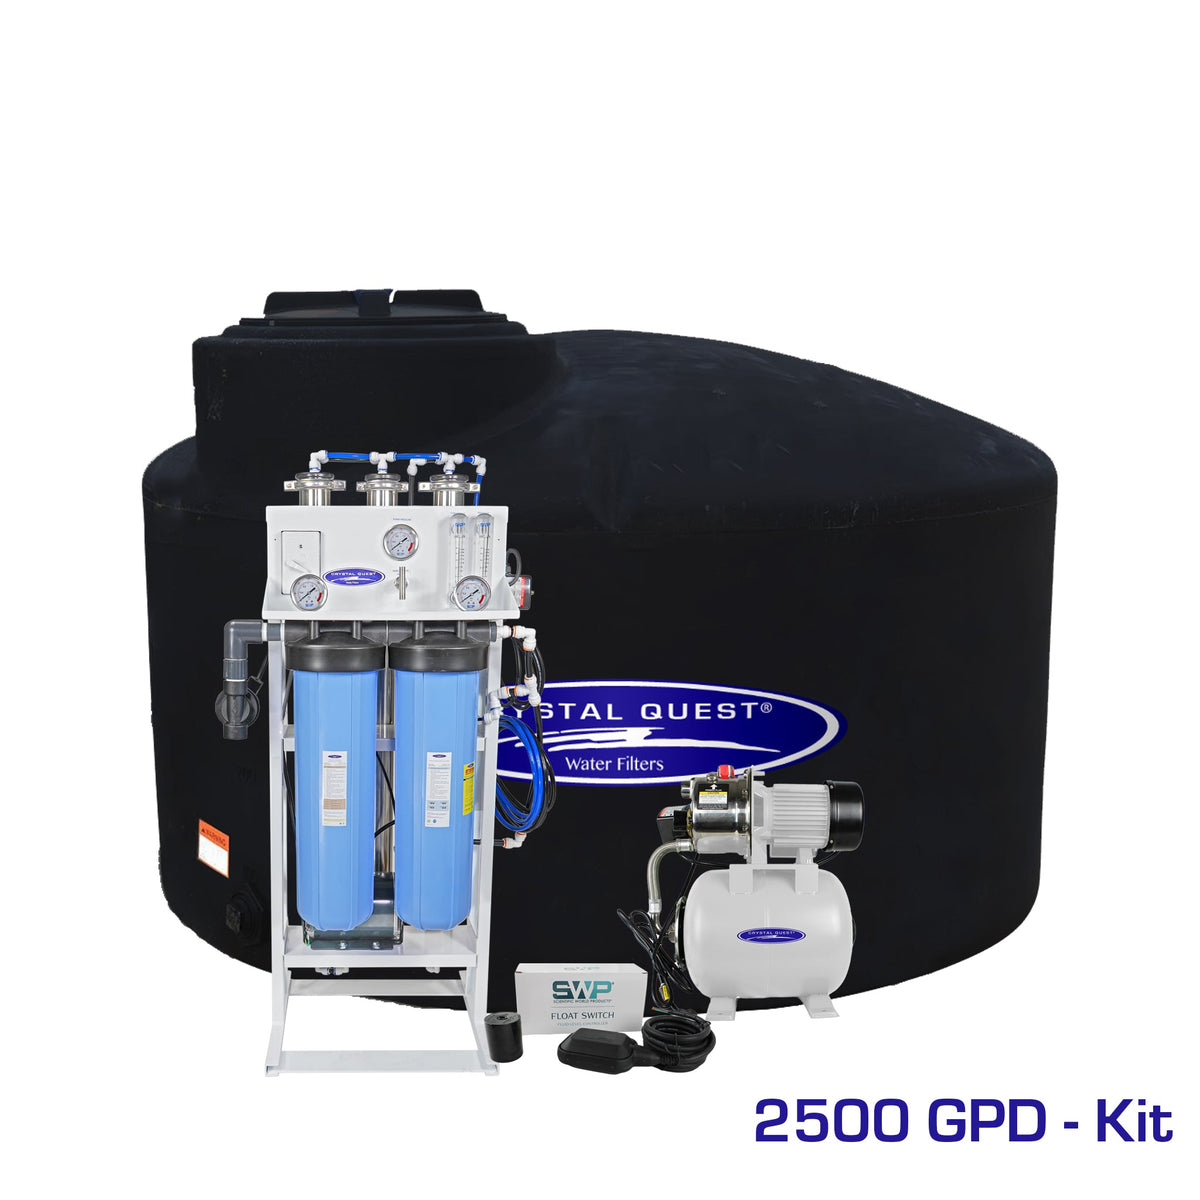 2500 GPD / Add Storage Tank Kit (550 Gal) Whole House Reverse Osmosis System - Reverse Osmosis System - Crystal Quest